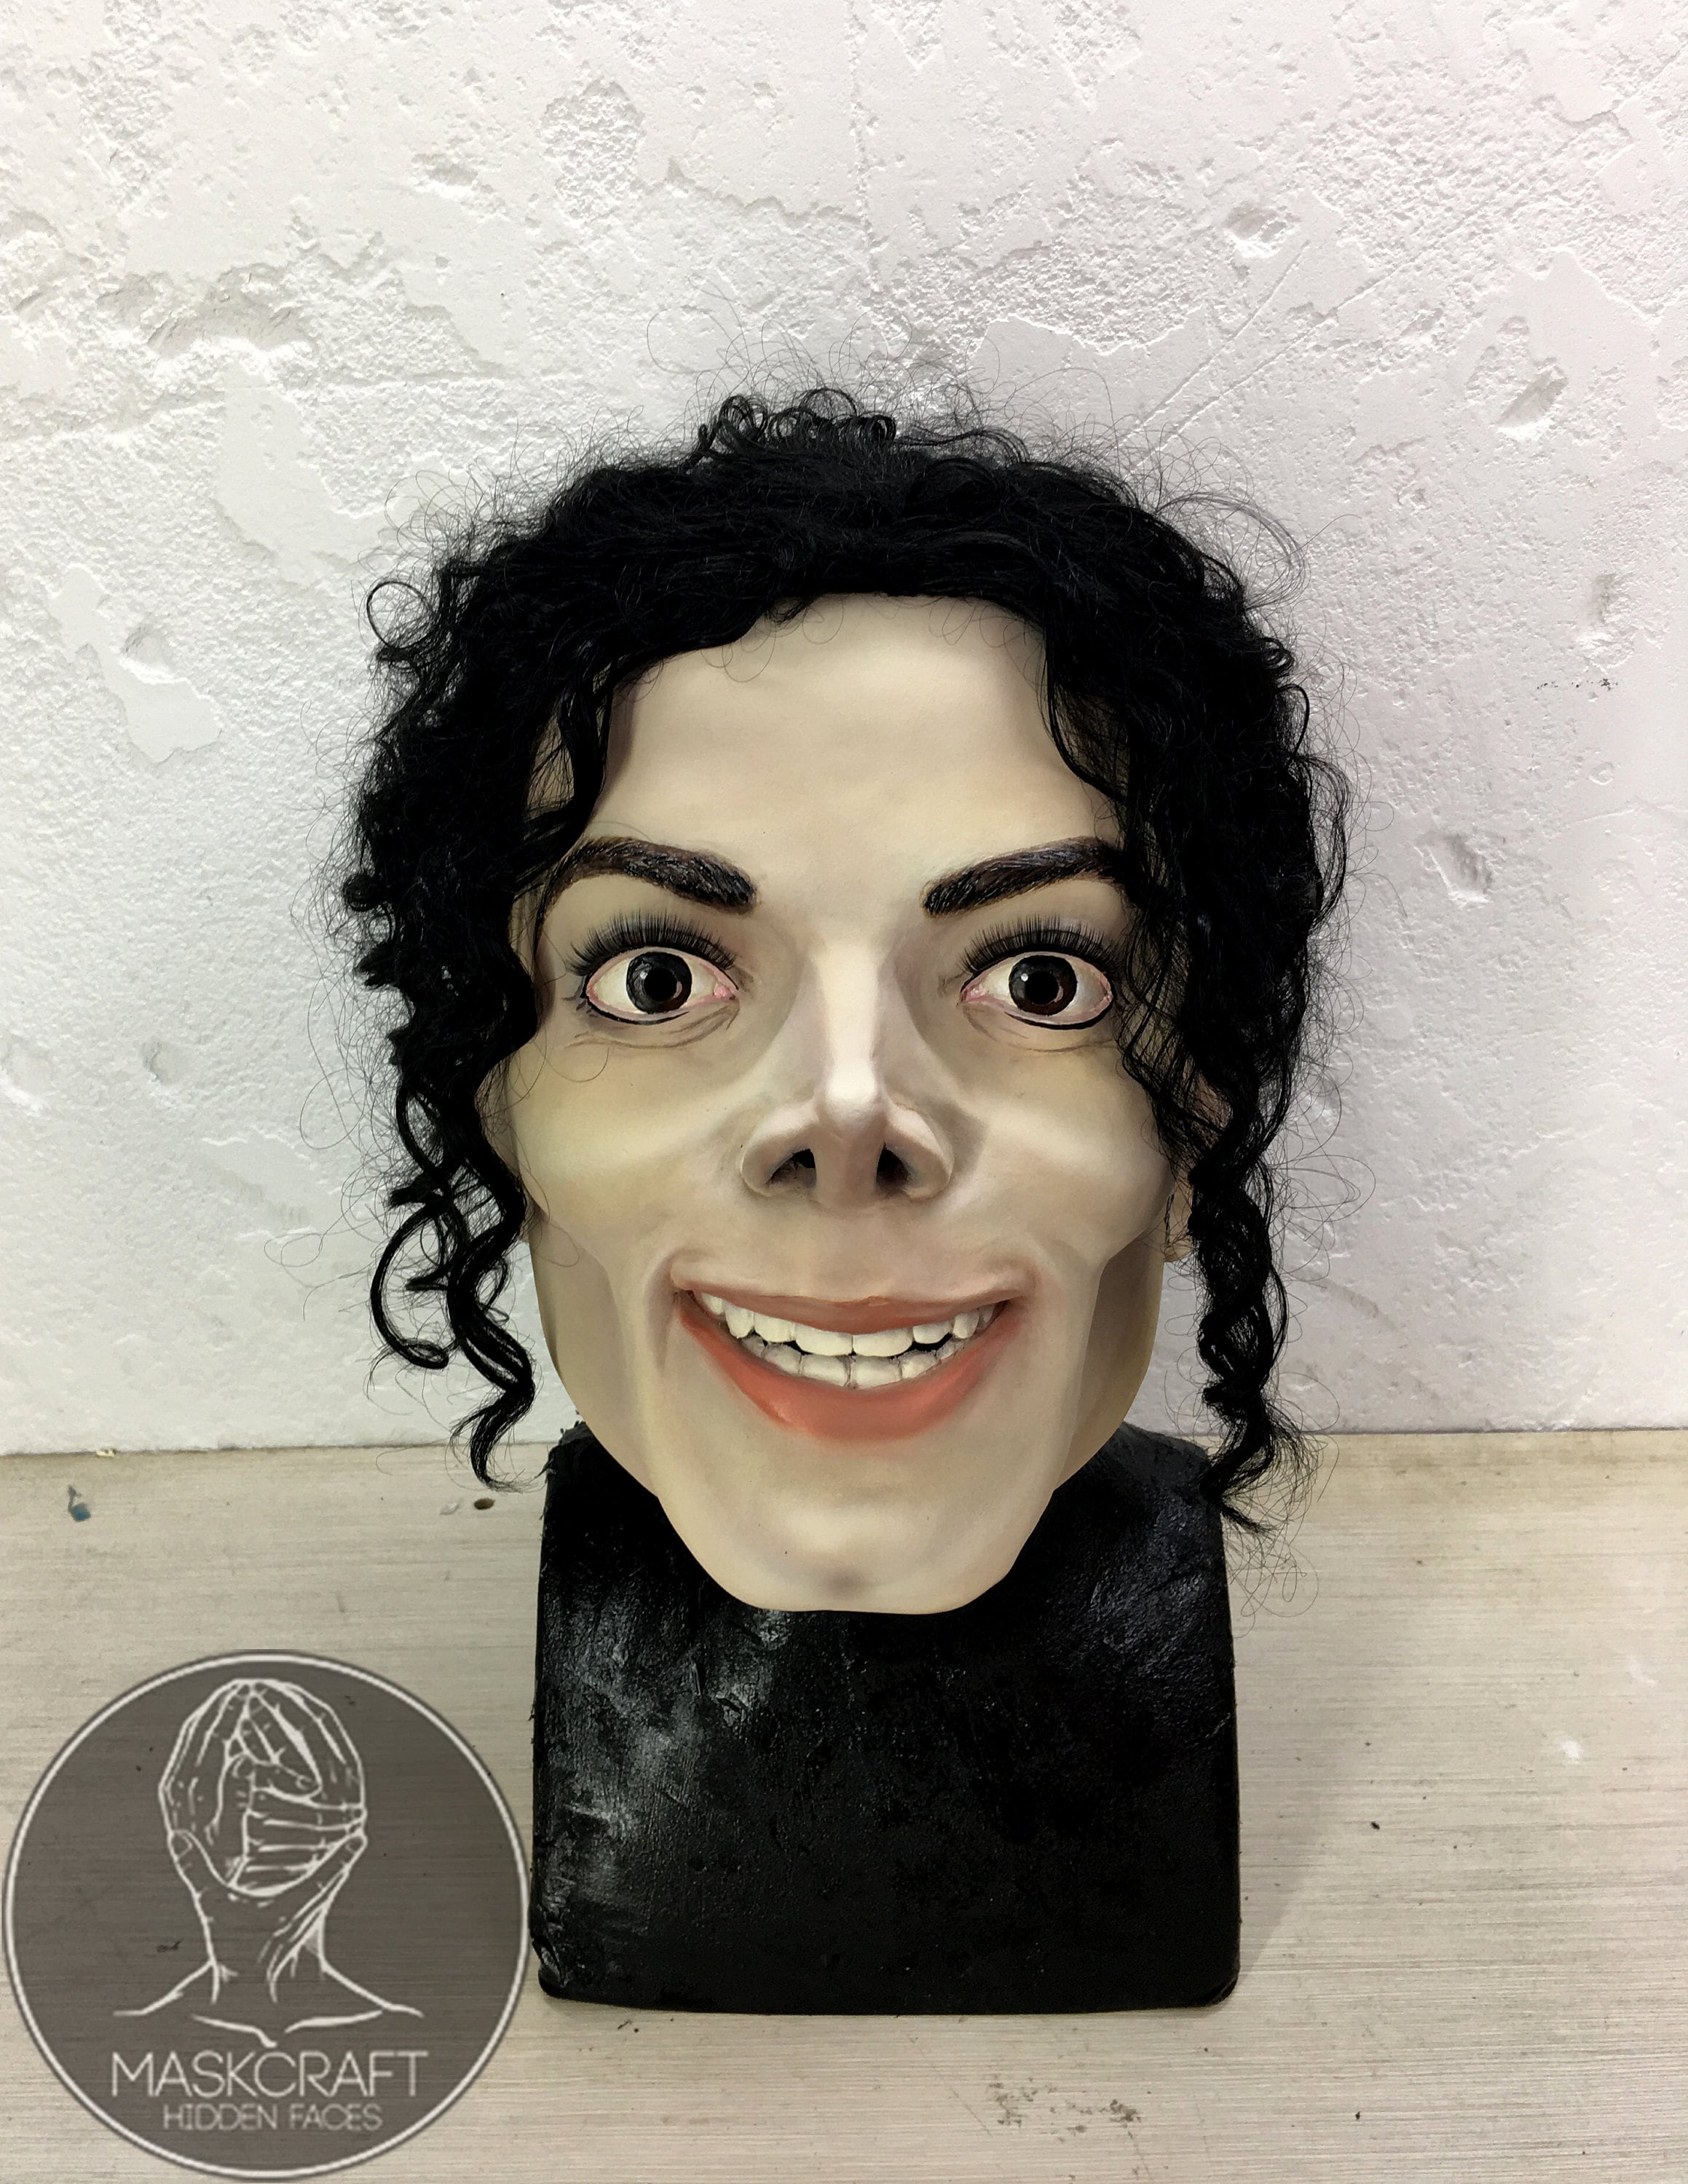 Michael Jackson costumes